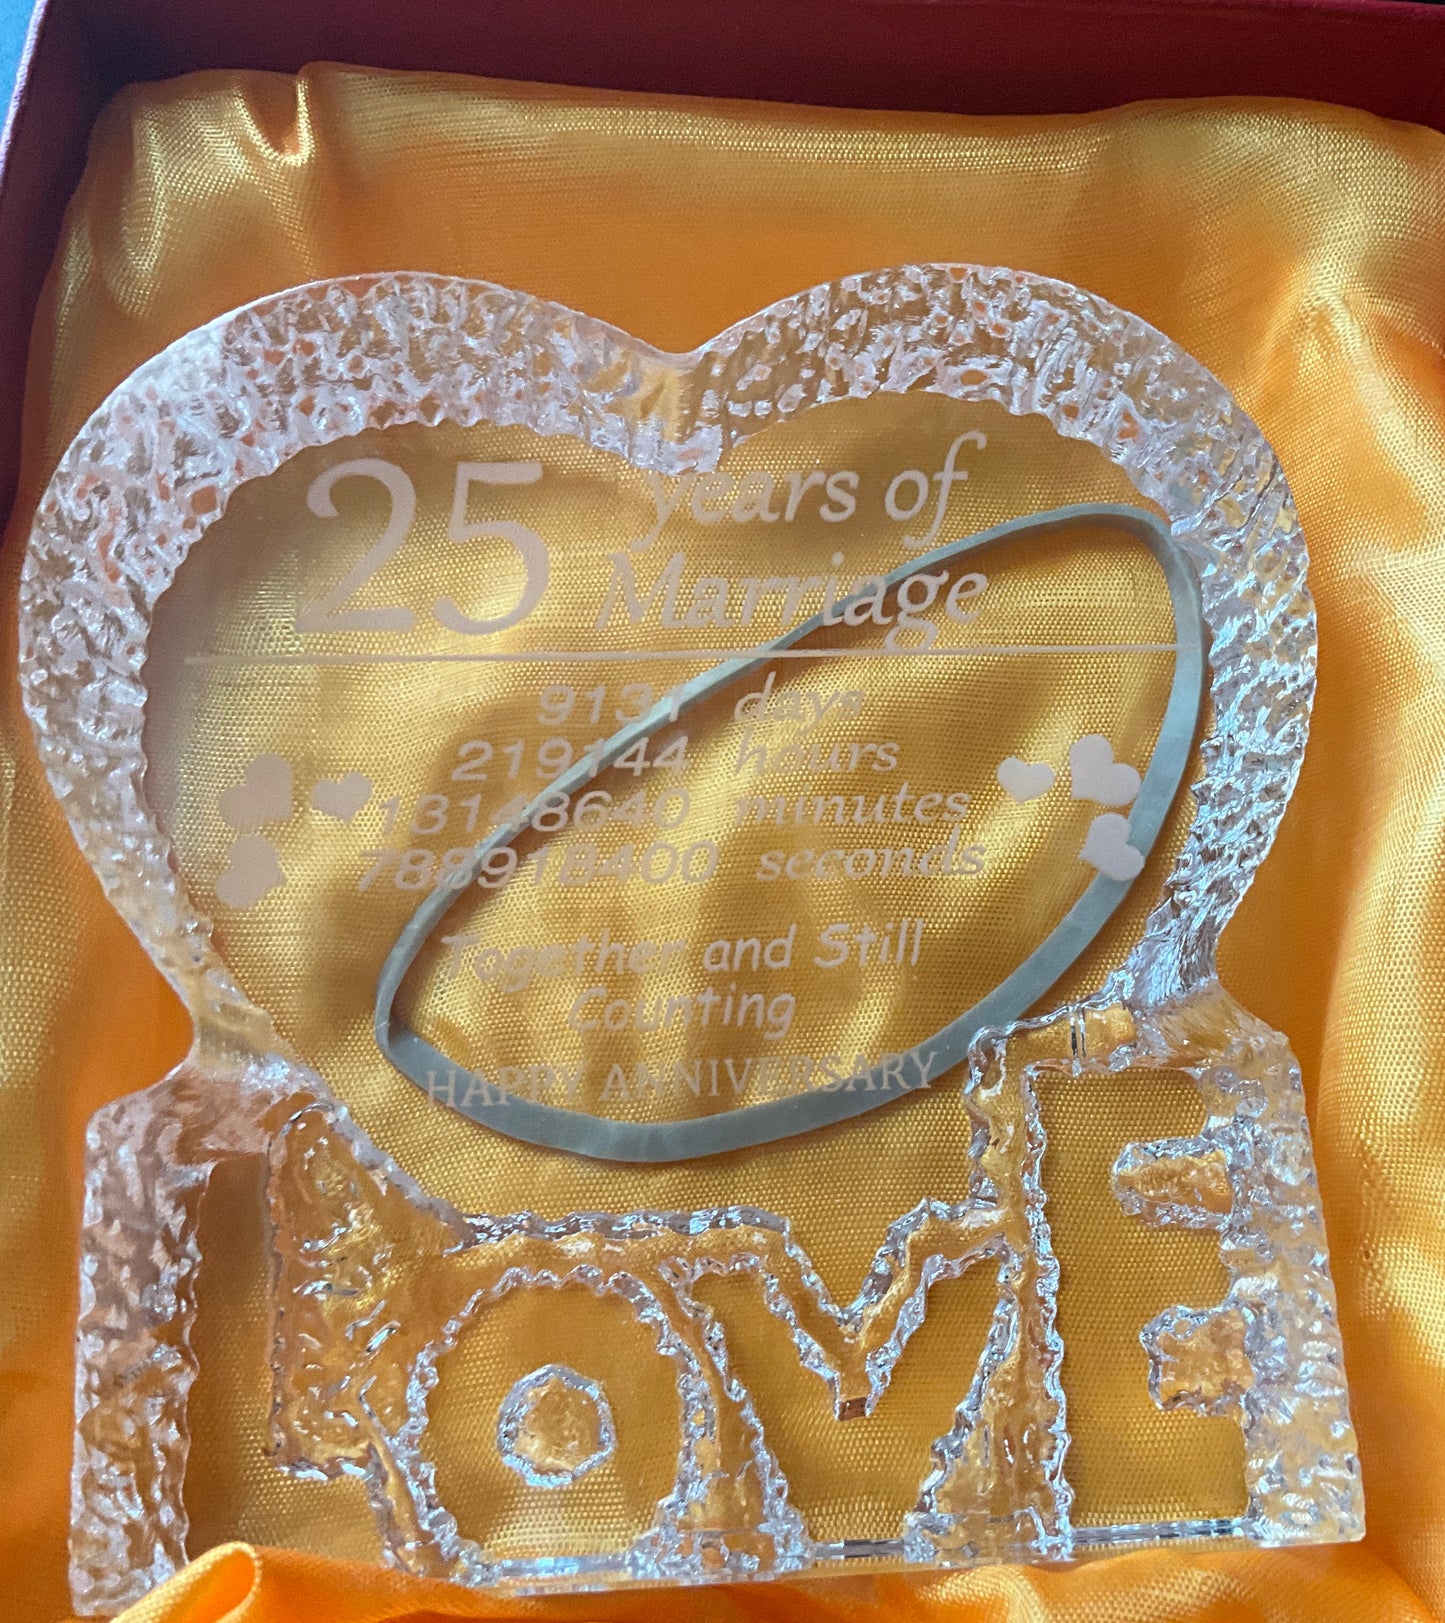 Lovly LOVE Heart 25 Years of Marriage lazer cut crystal anniversary keepsake